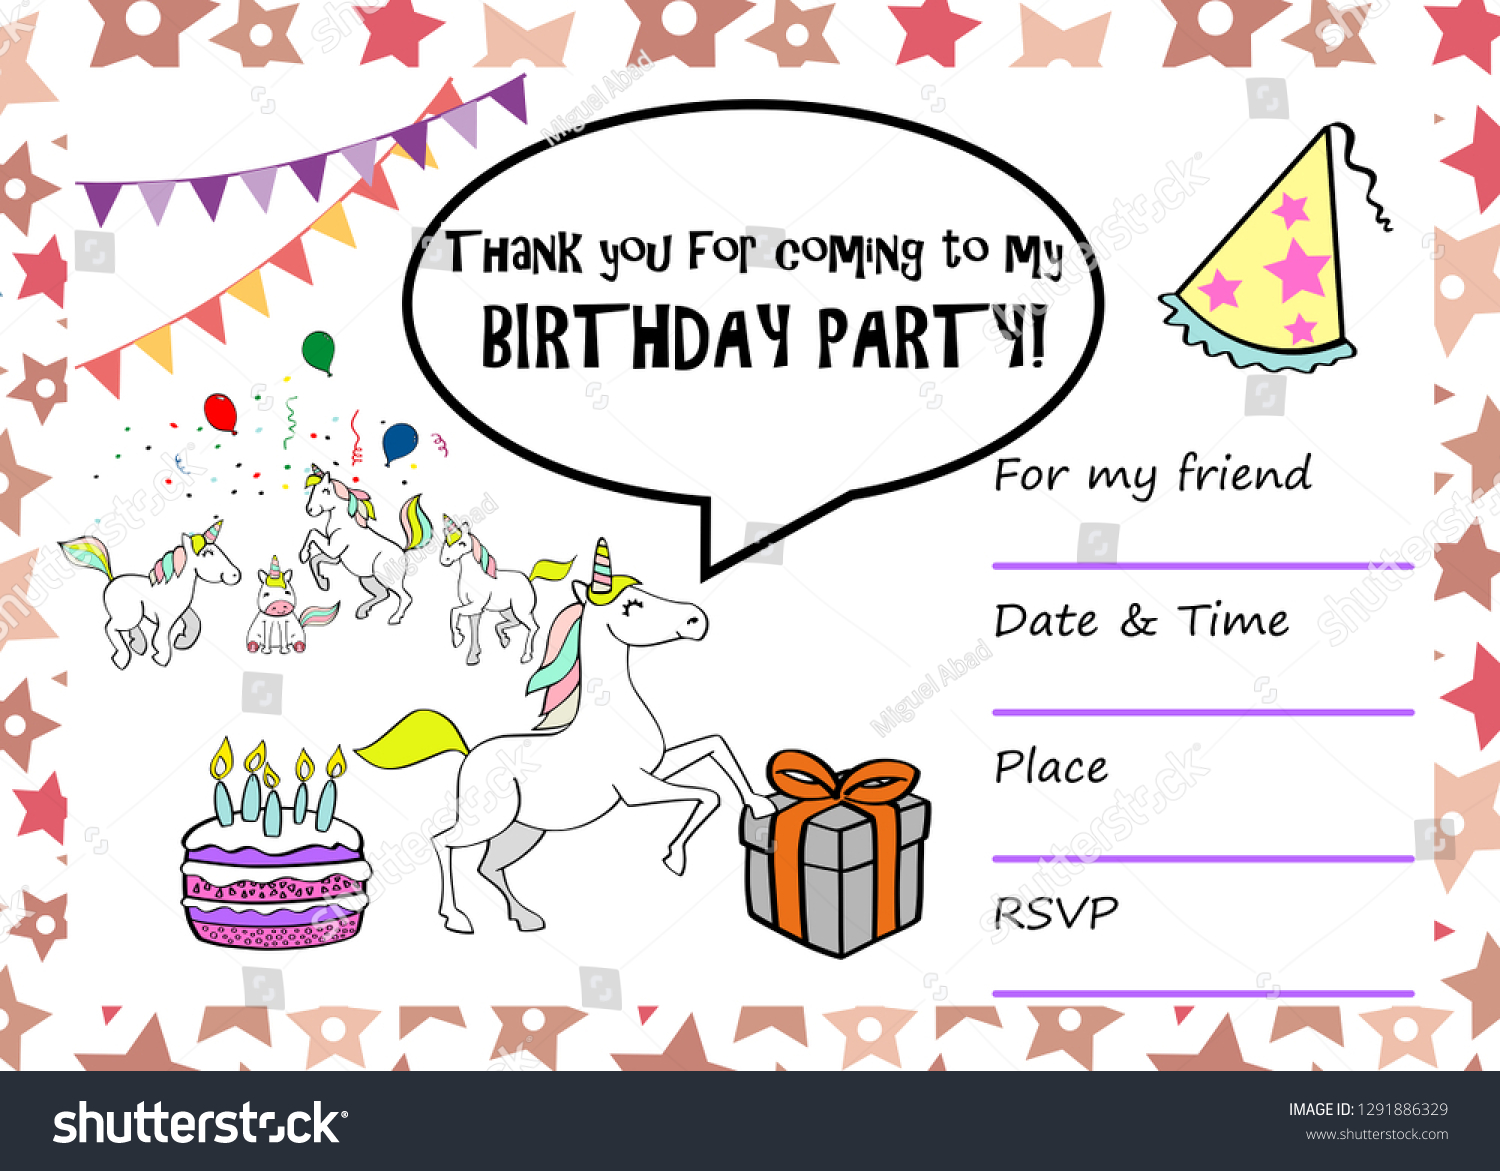 kids-birthday-party-invitation-card-sentence-stock-vektorgrafik-lizenzfrei-1291886329